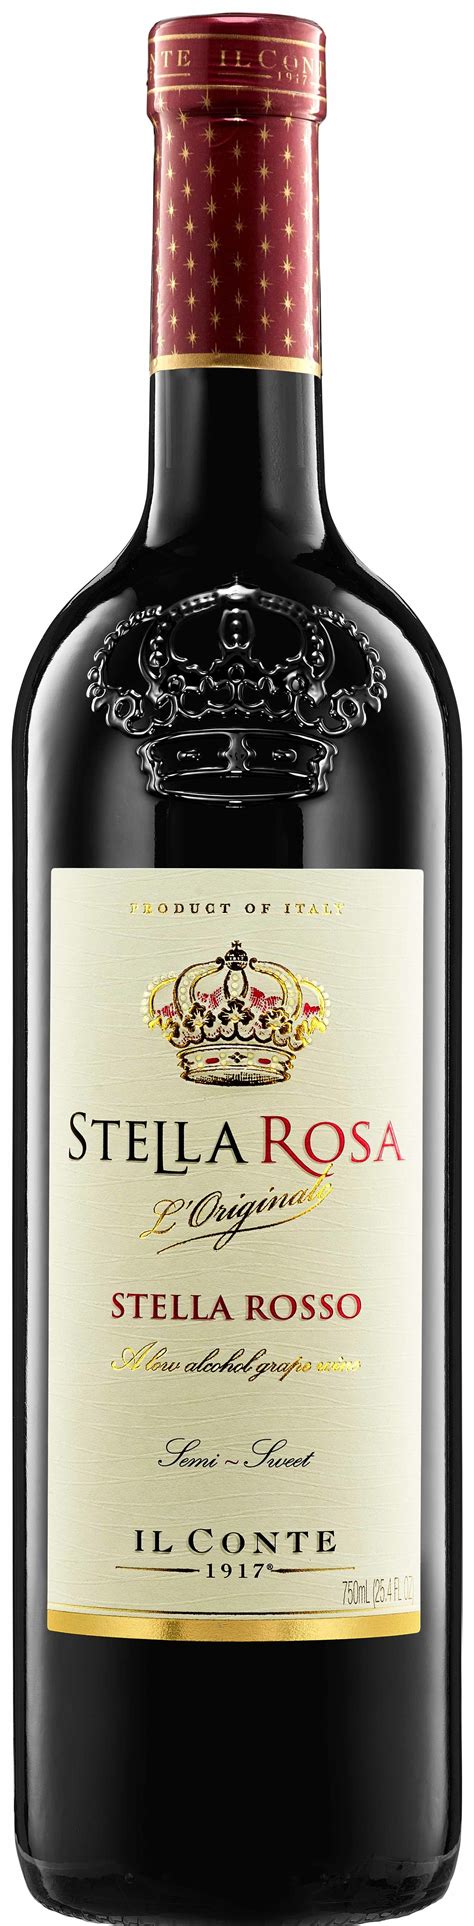 stella rosa stella rosso ml busters liquors wines